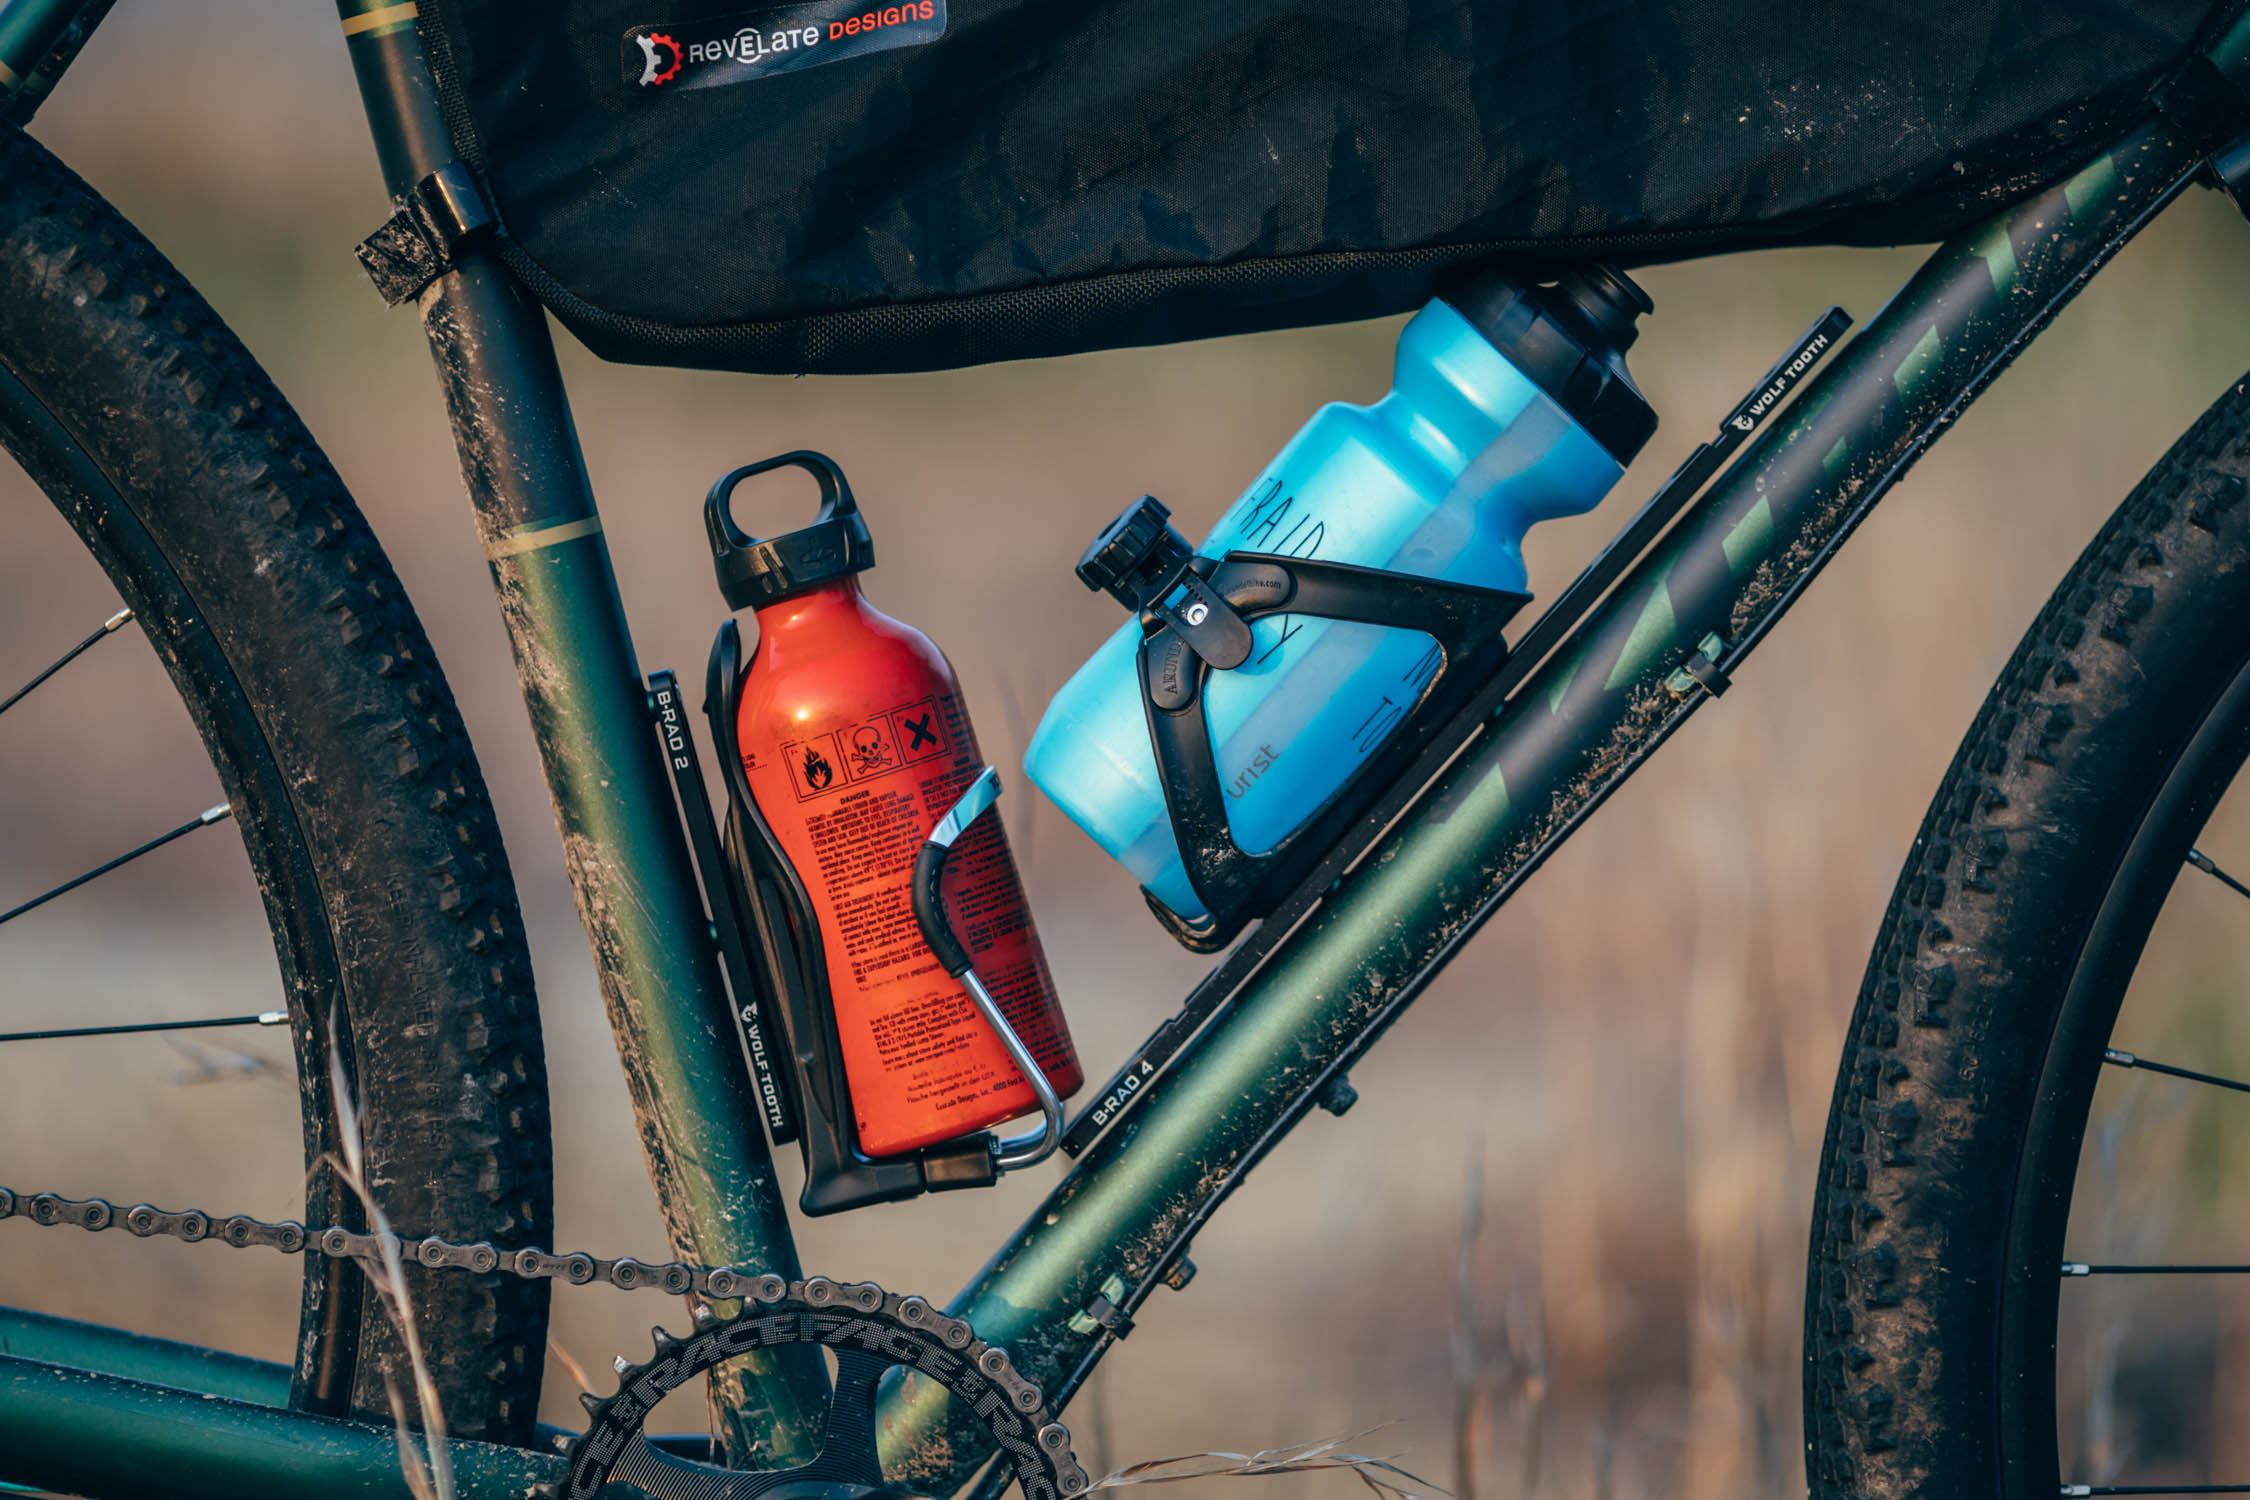 Bike Bicycle Cycling Drink Water Bottle Carrier Rack Holder Bracket Cage UK# !^